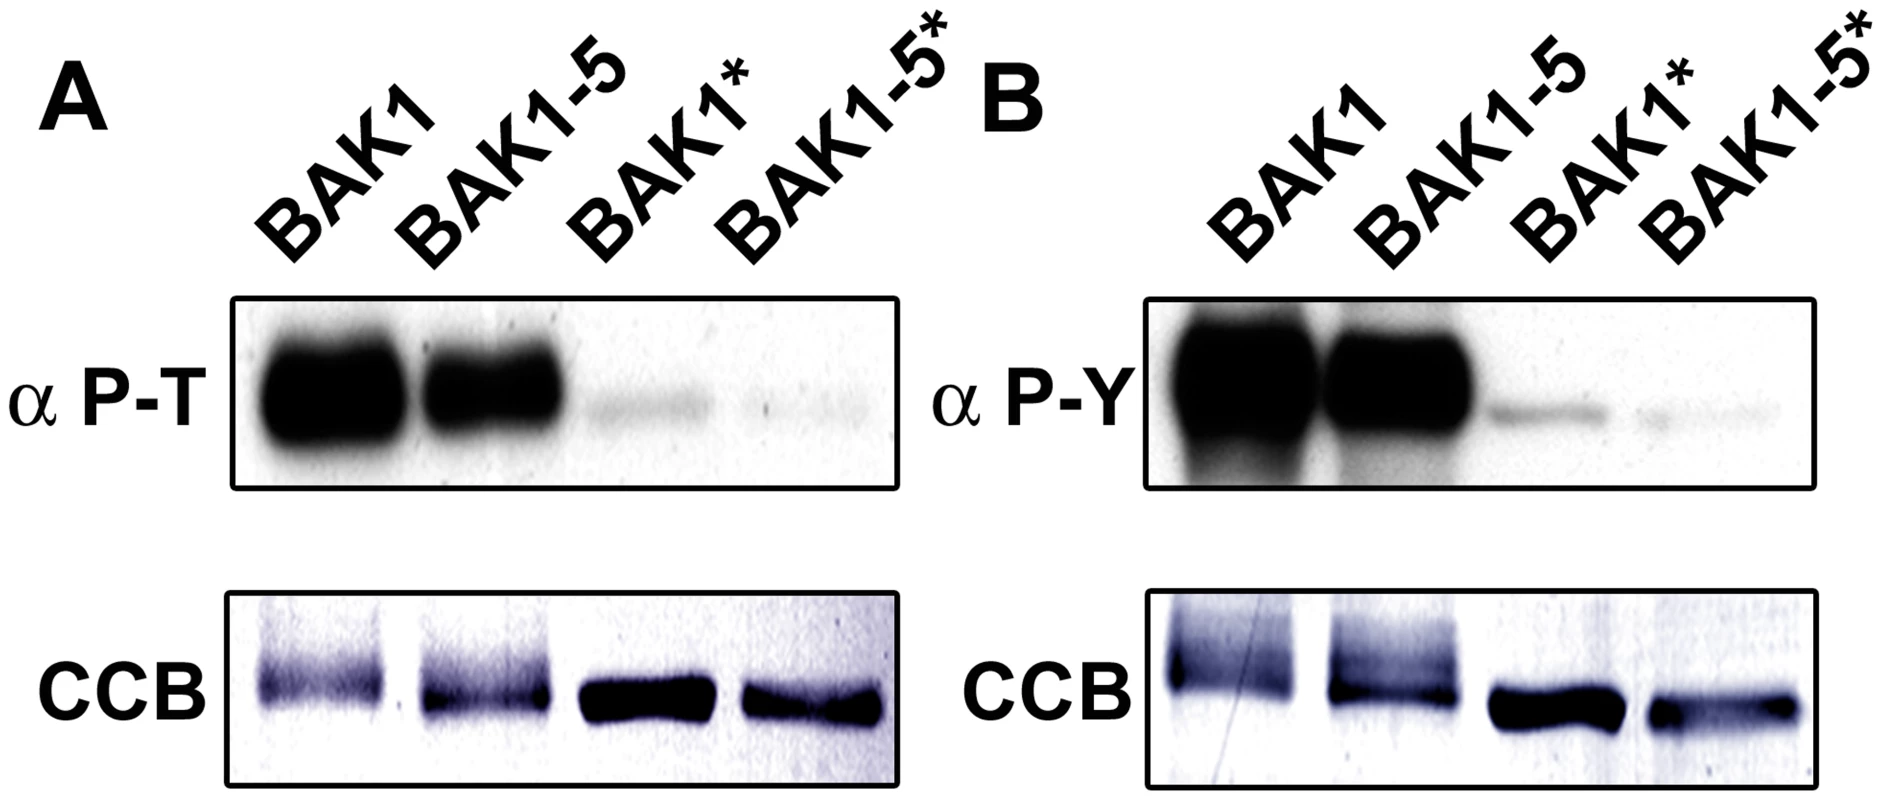 BAK1-5 is a hypoactive kinase &lt;i&gt;in vitro.&lt;/i&gt;